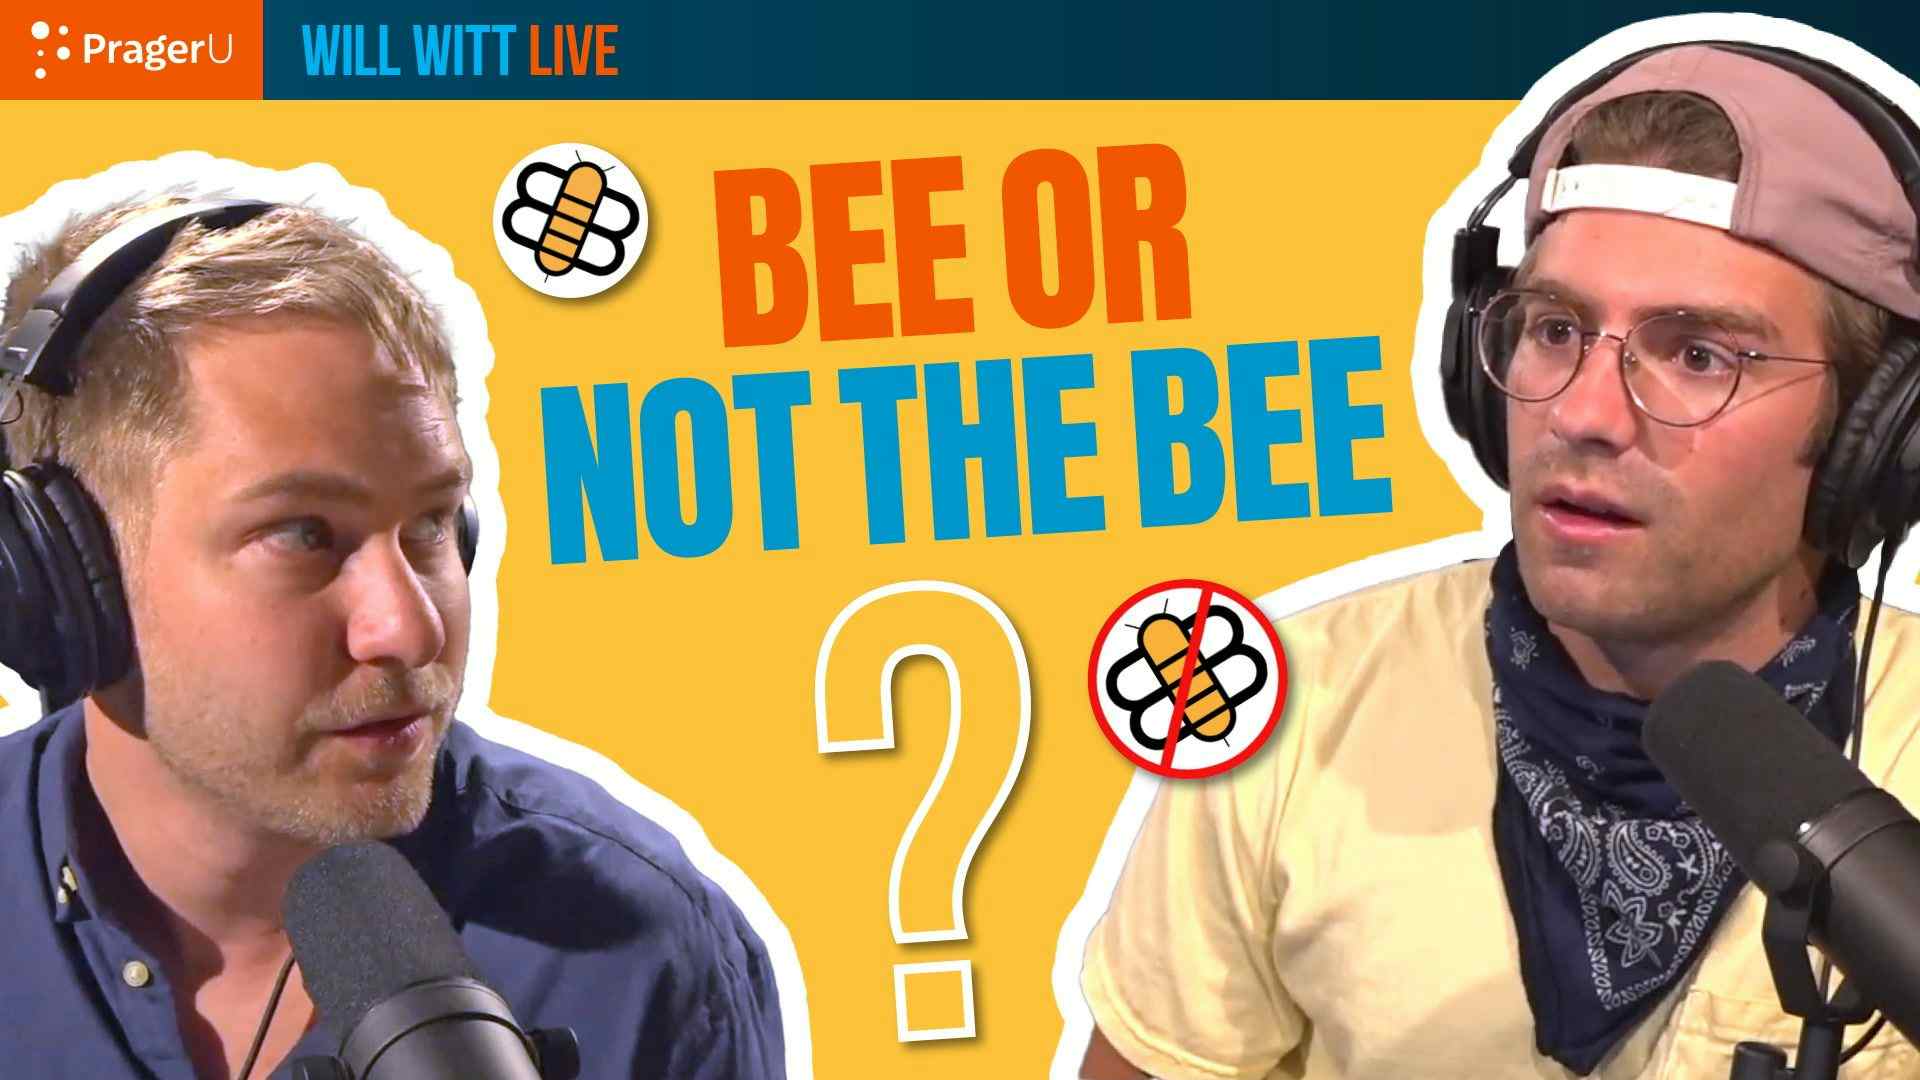 Gametime: Real Headline or Babylon Bee?